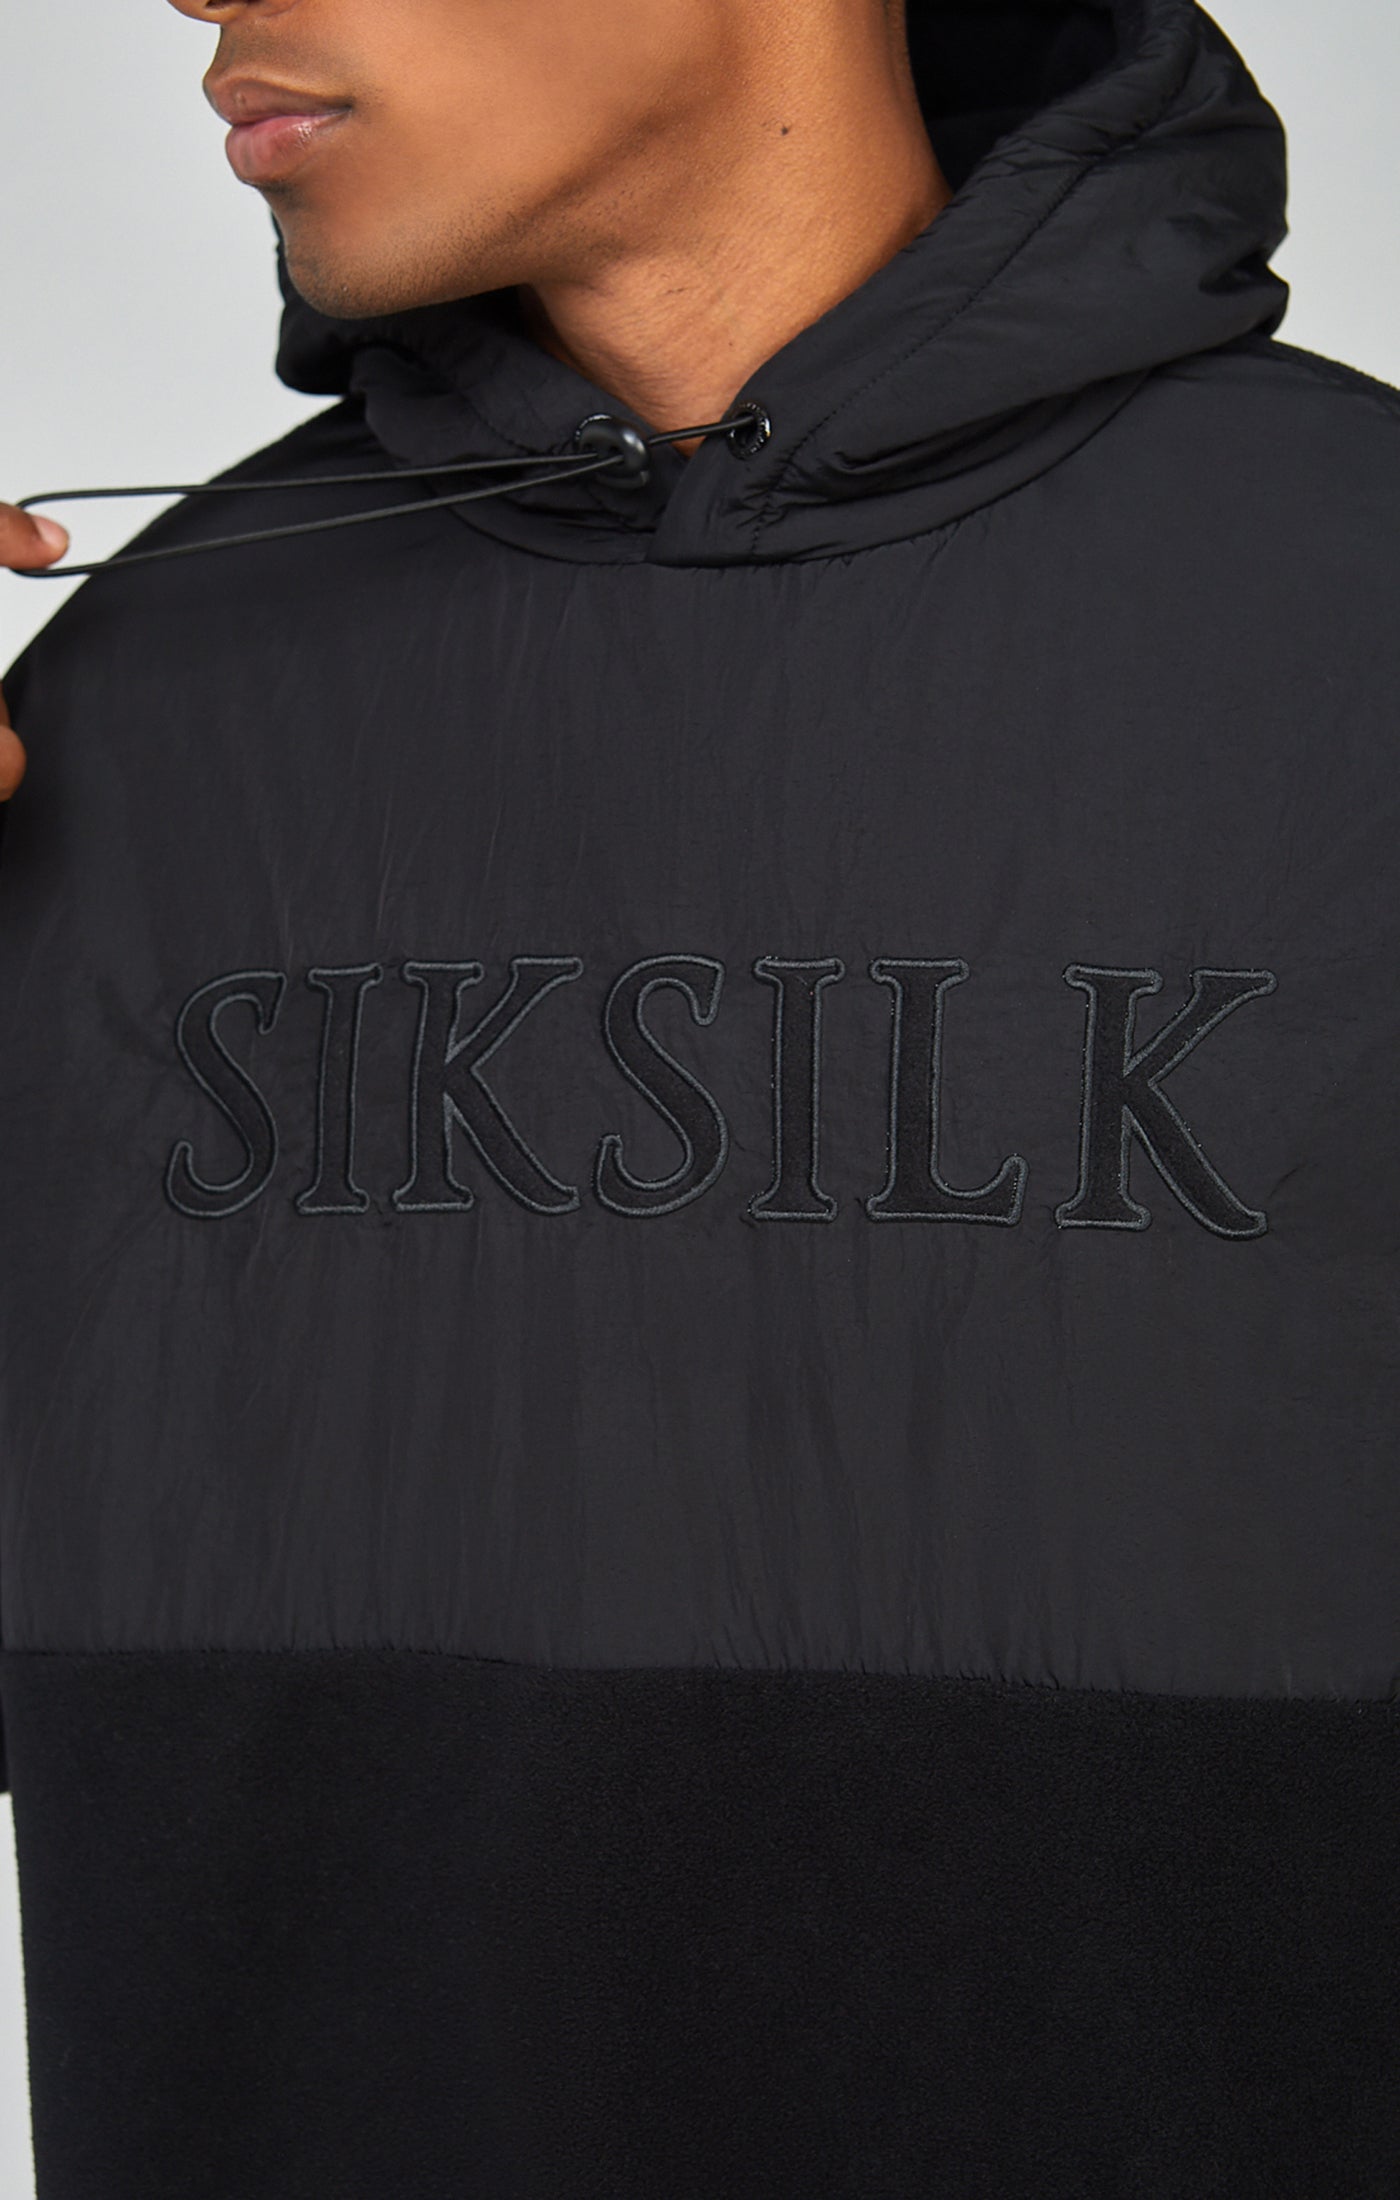 Polar Fleece Cut & Sew Overhead Hoodie in Black Sweatshirts SikSilk   